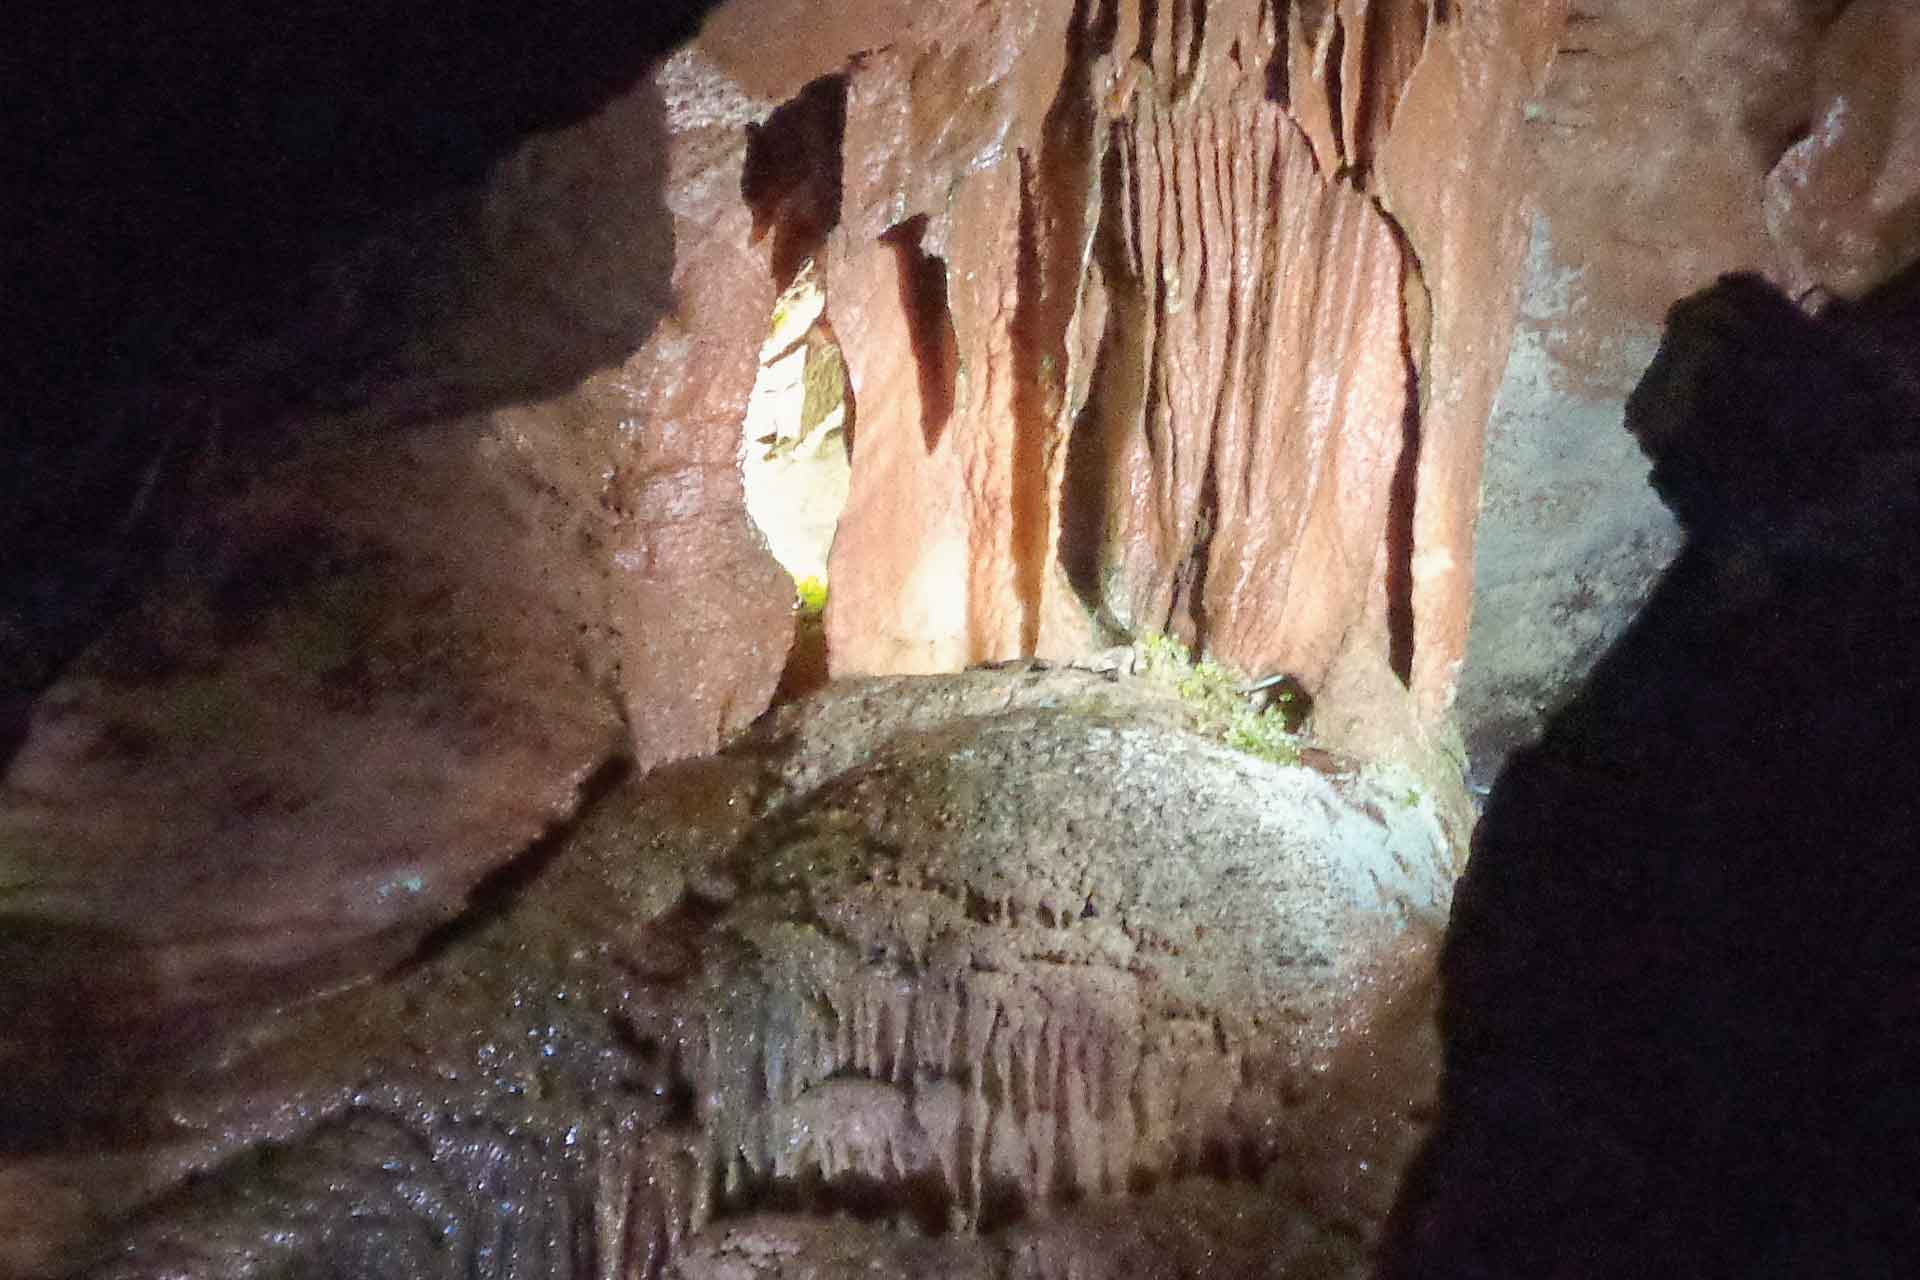 A closeup shot of stalactites inside a cavern.